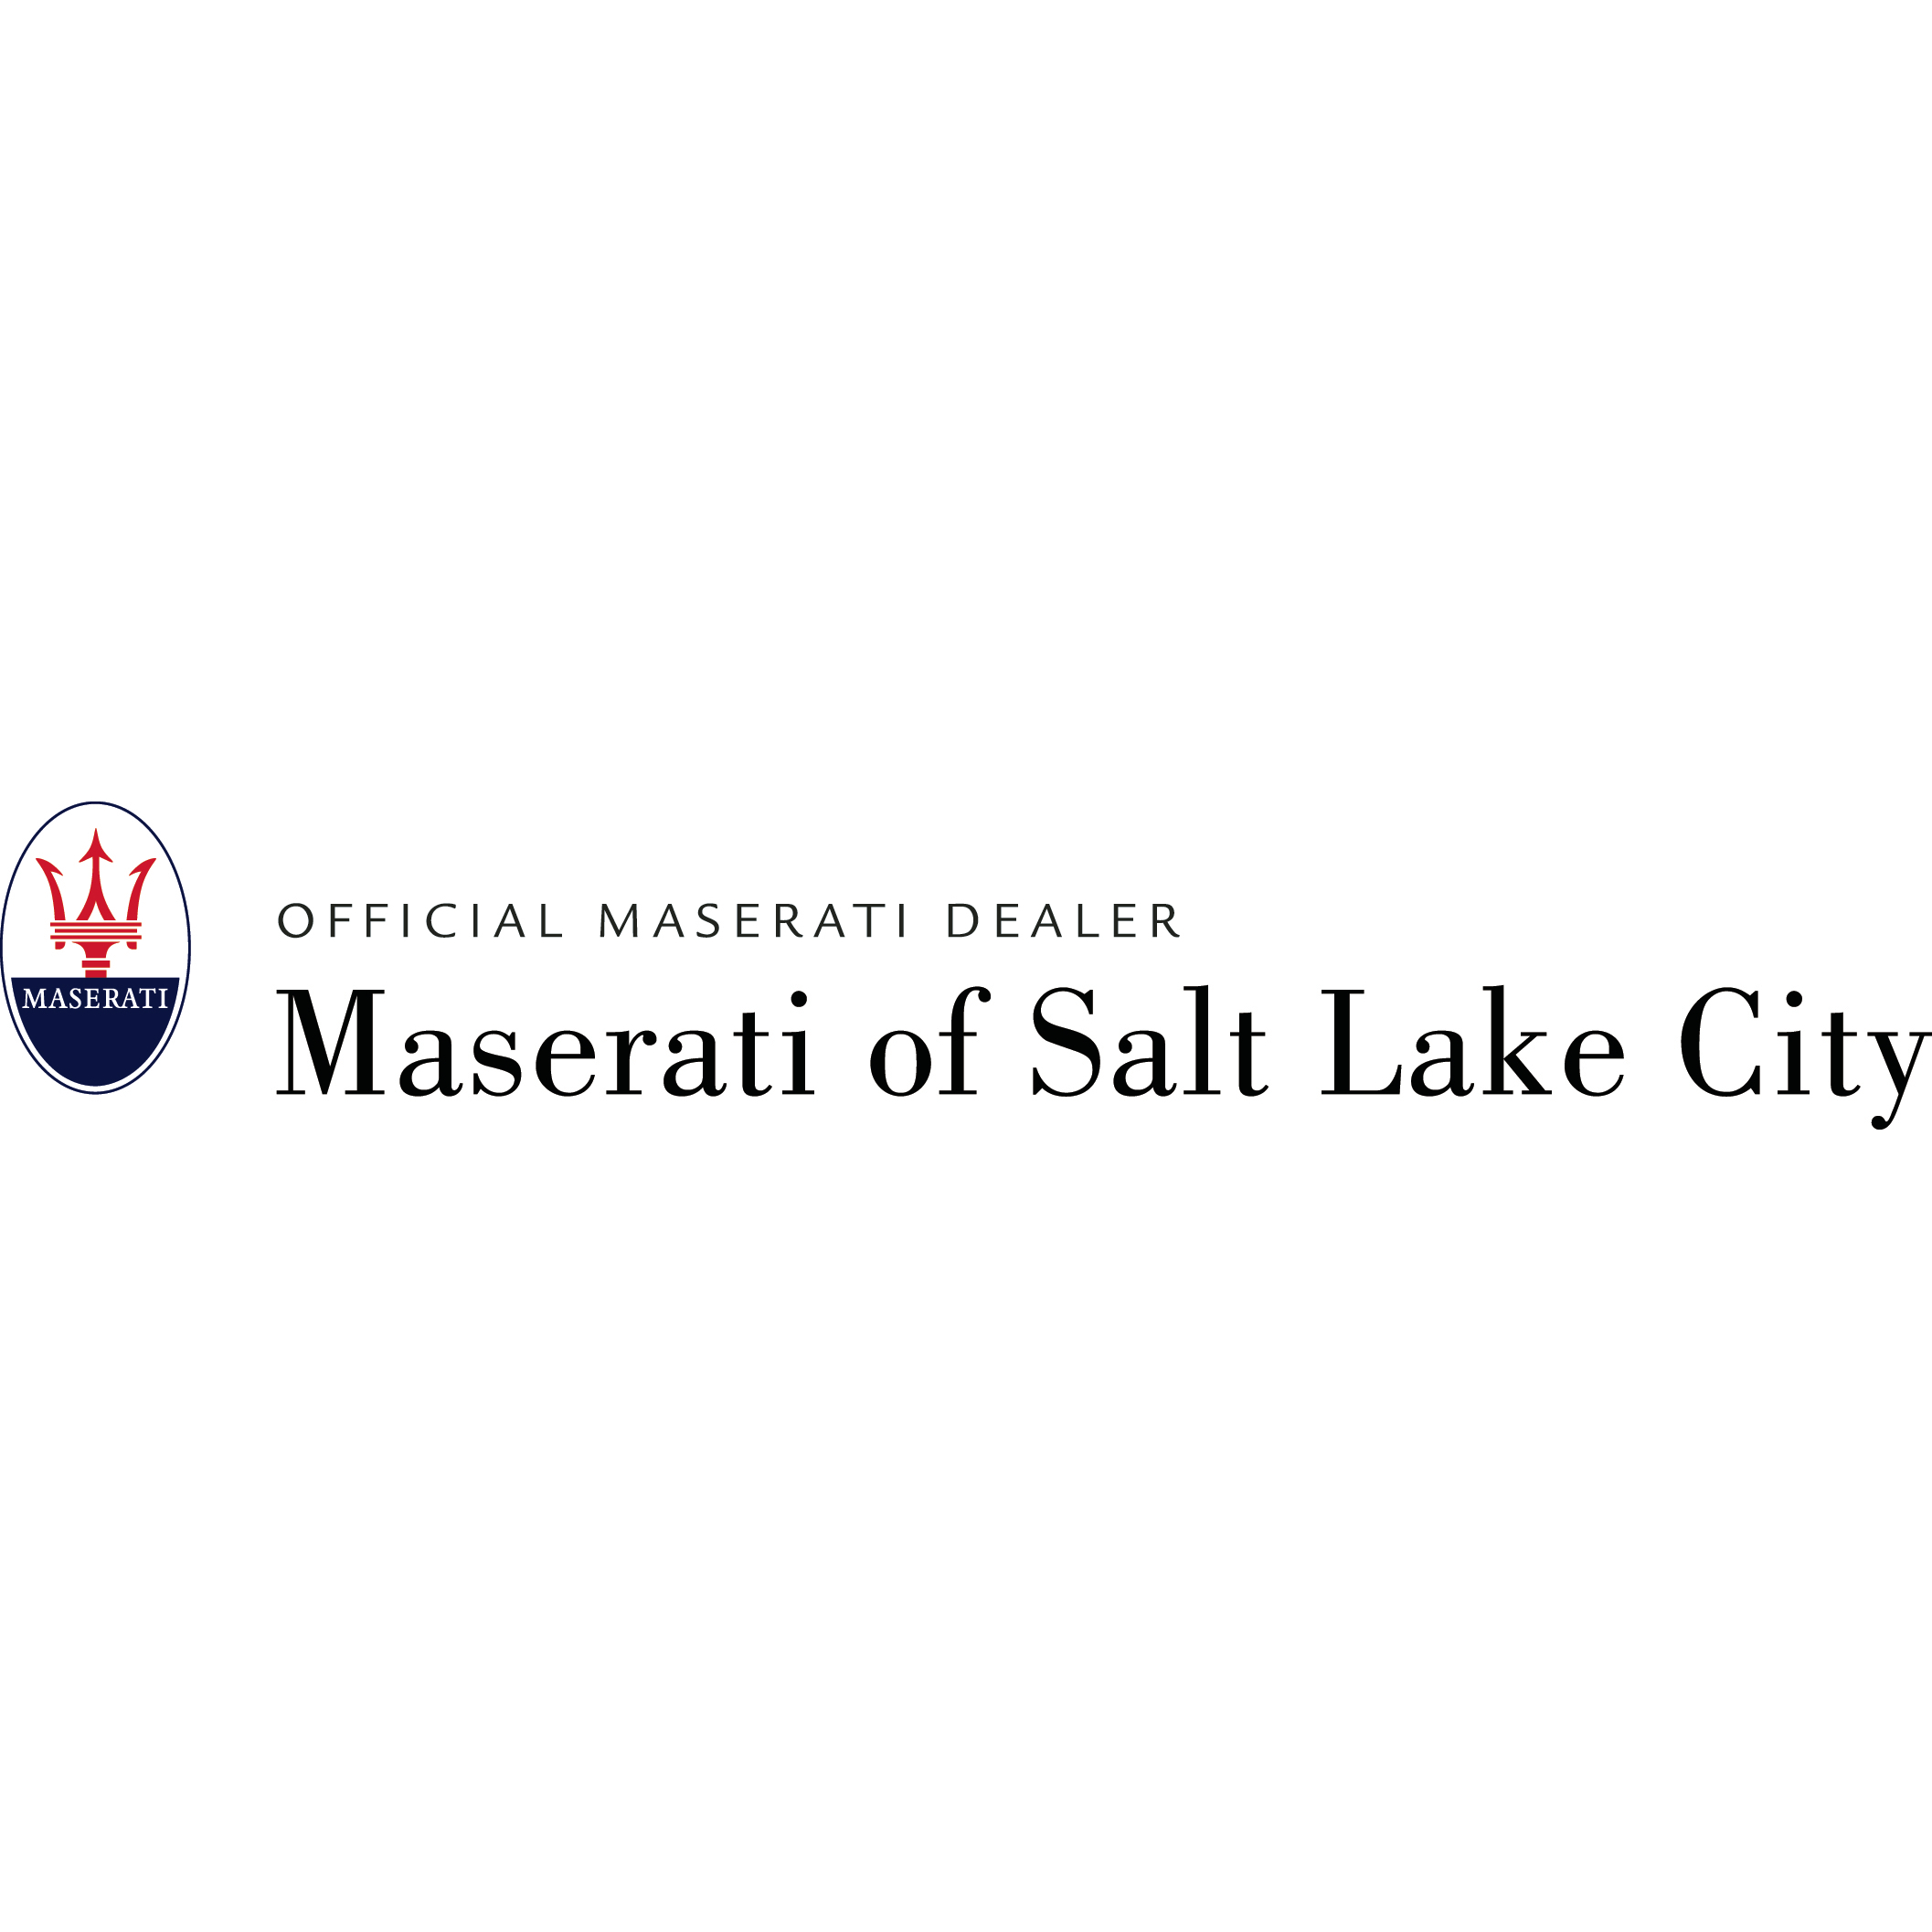 Maserati of Salt Lake City